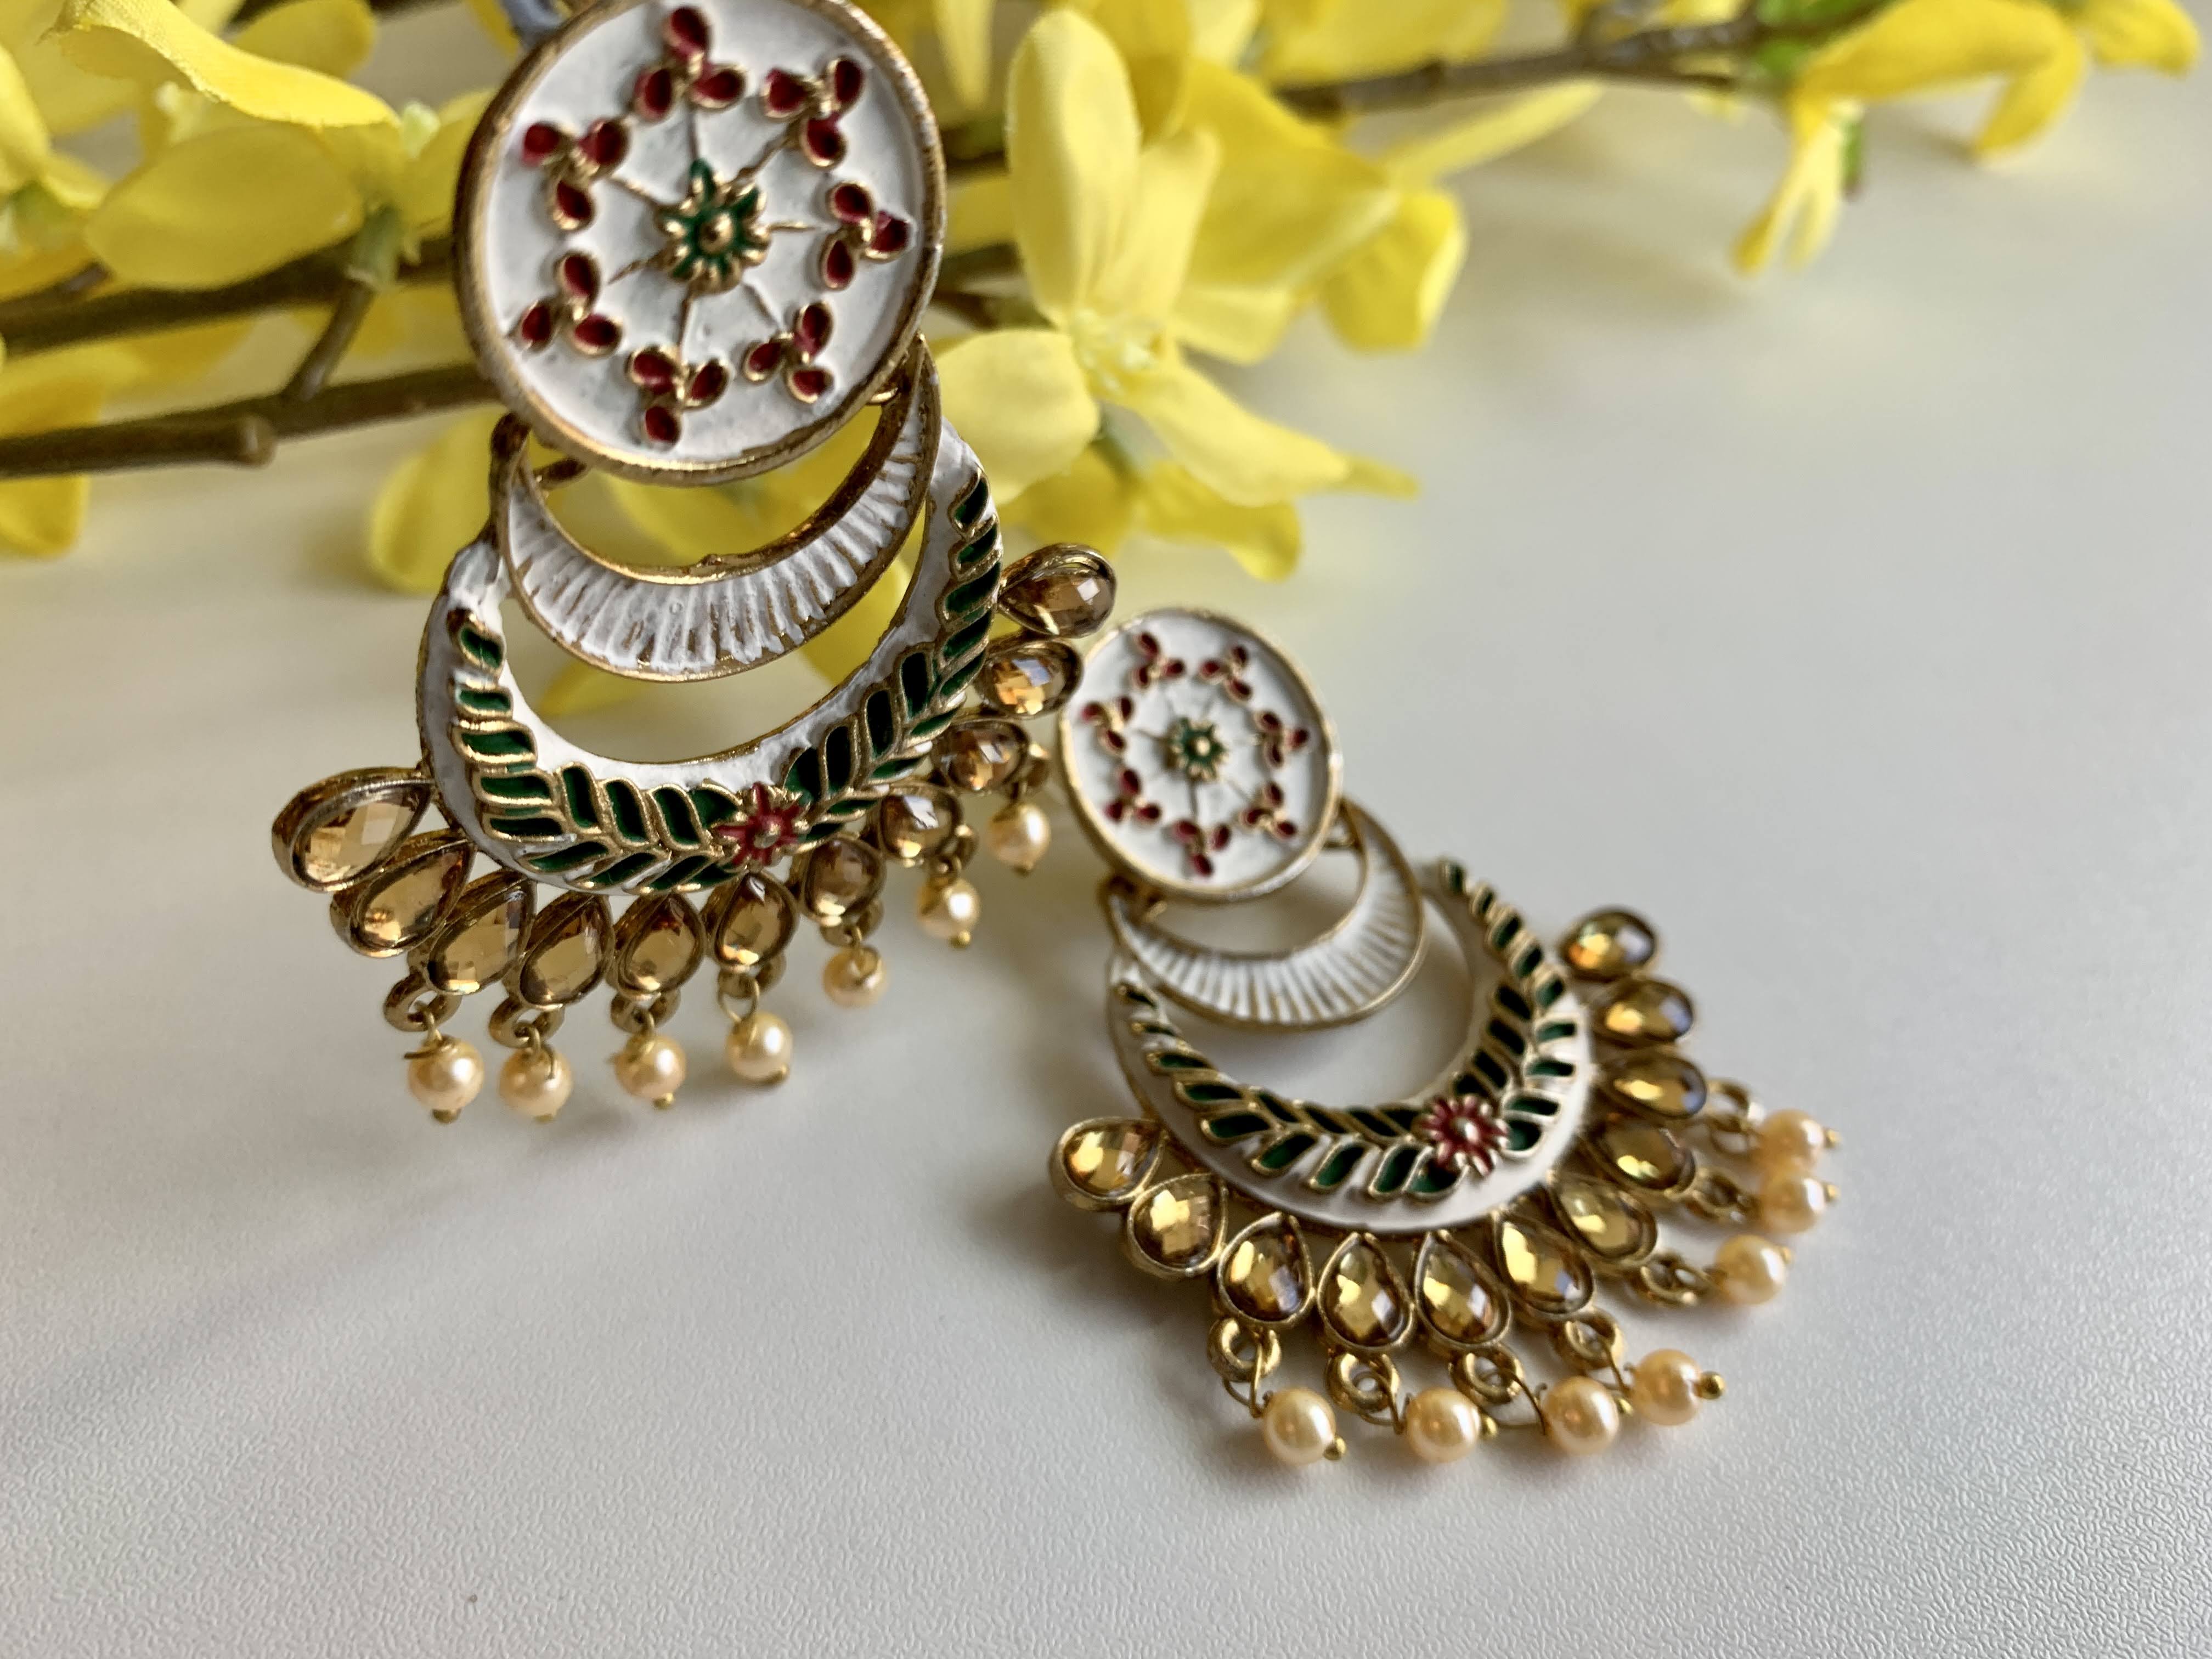 Minakari Kundan Earrings - Gold White Color - Faux Pearl Beads